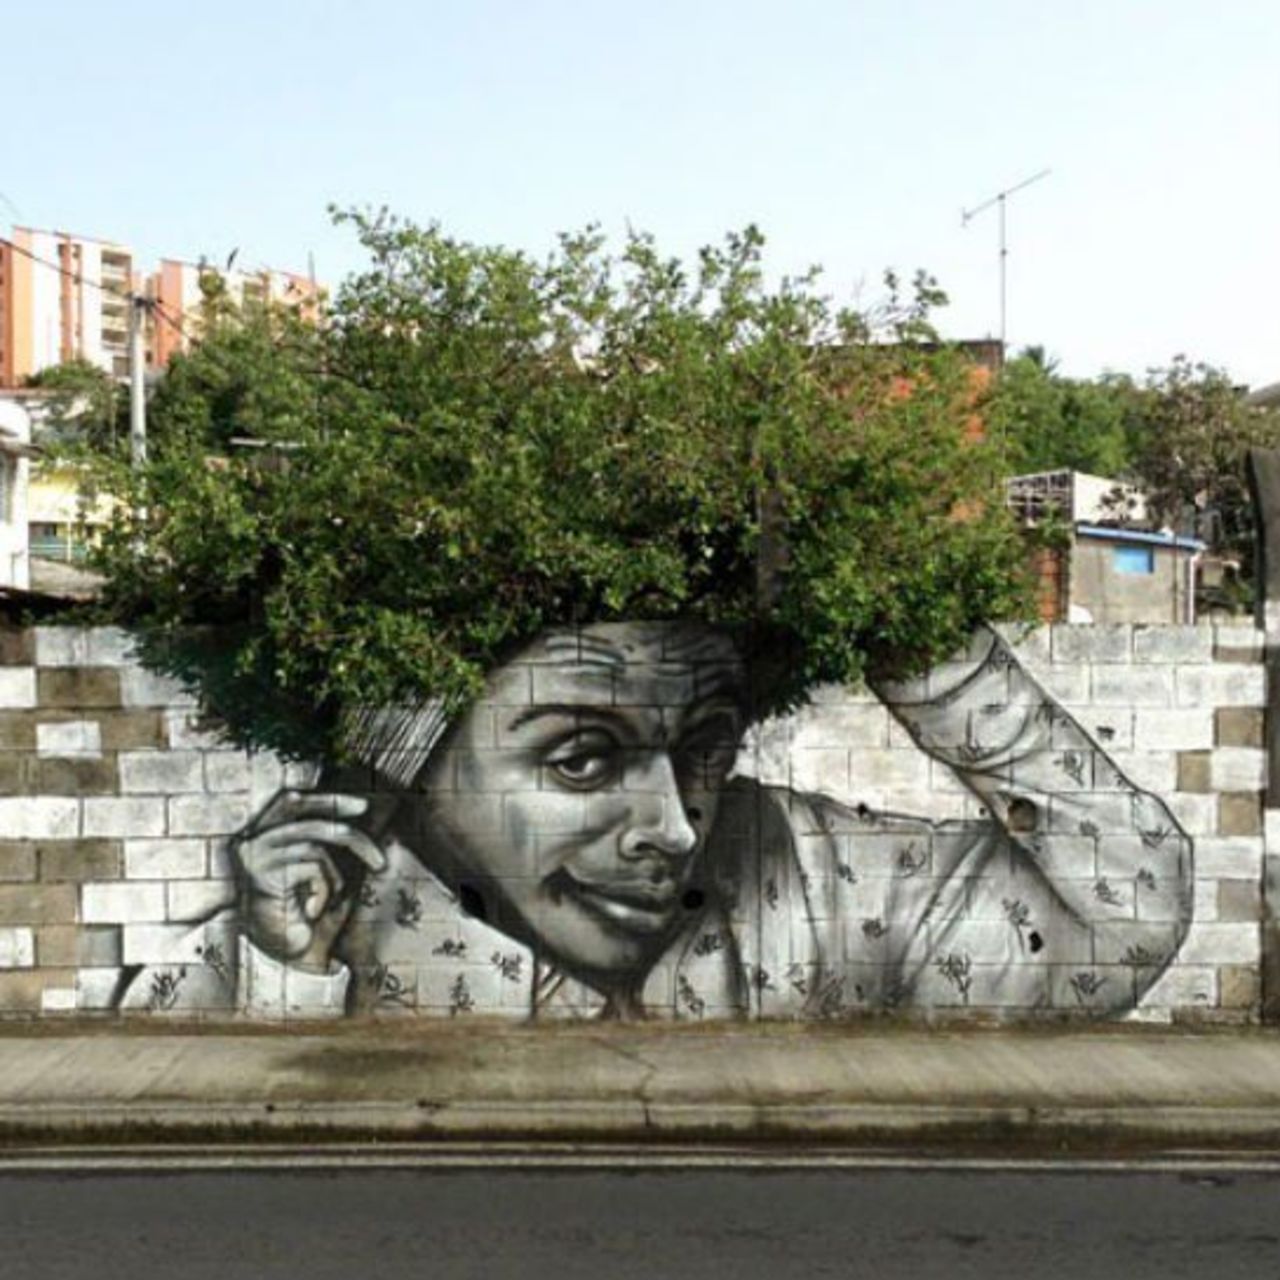 Schicke Frisur!#streetart #mural #graffiti #art https://t.co/nphntI1HdV